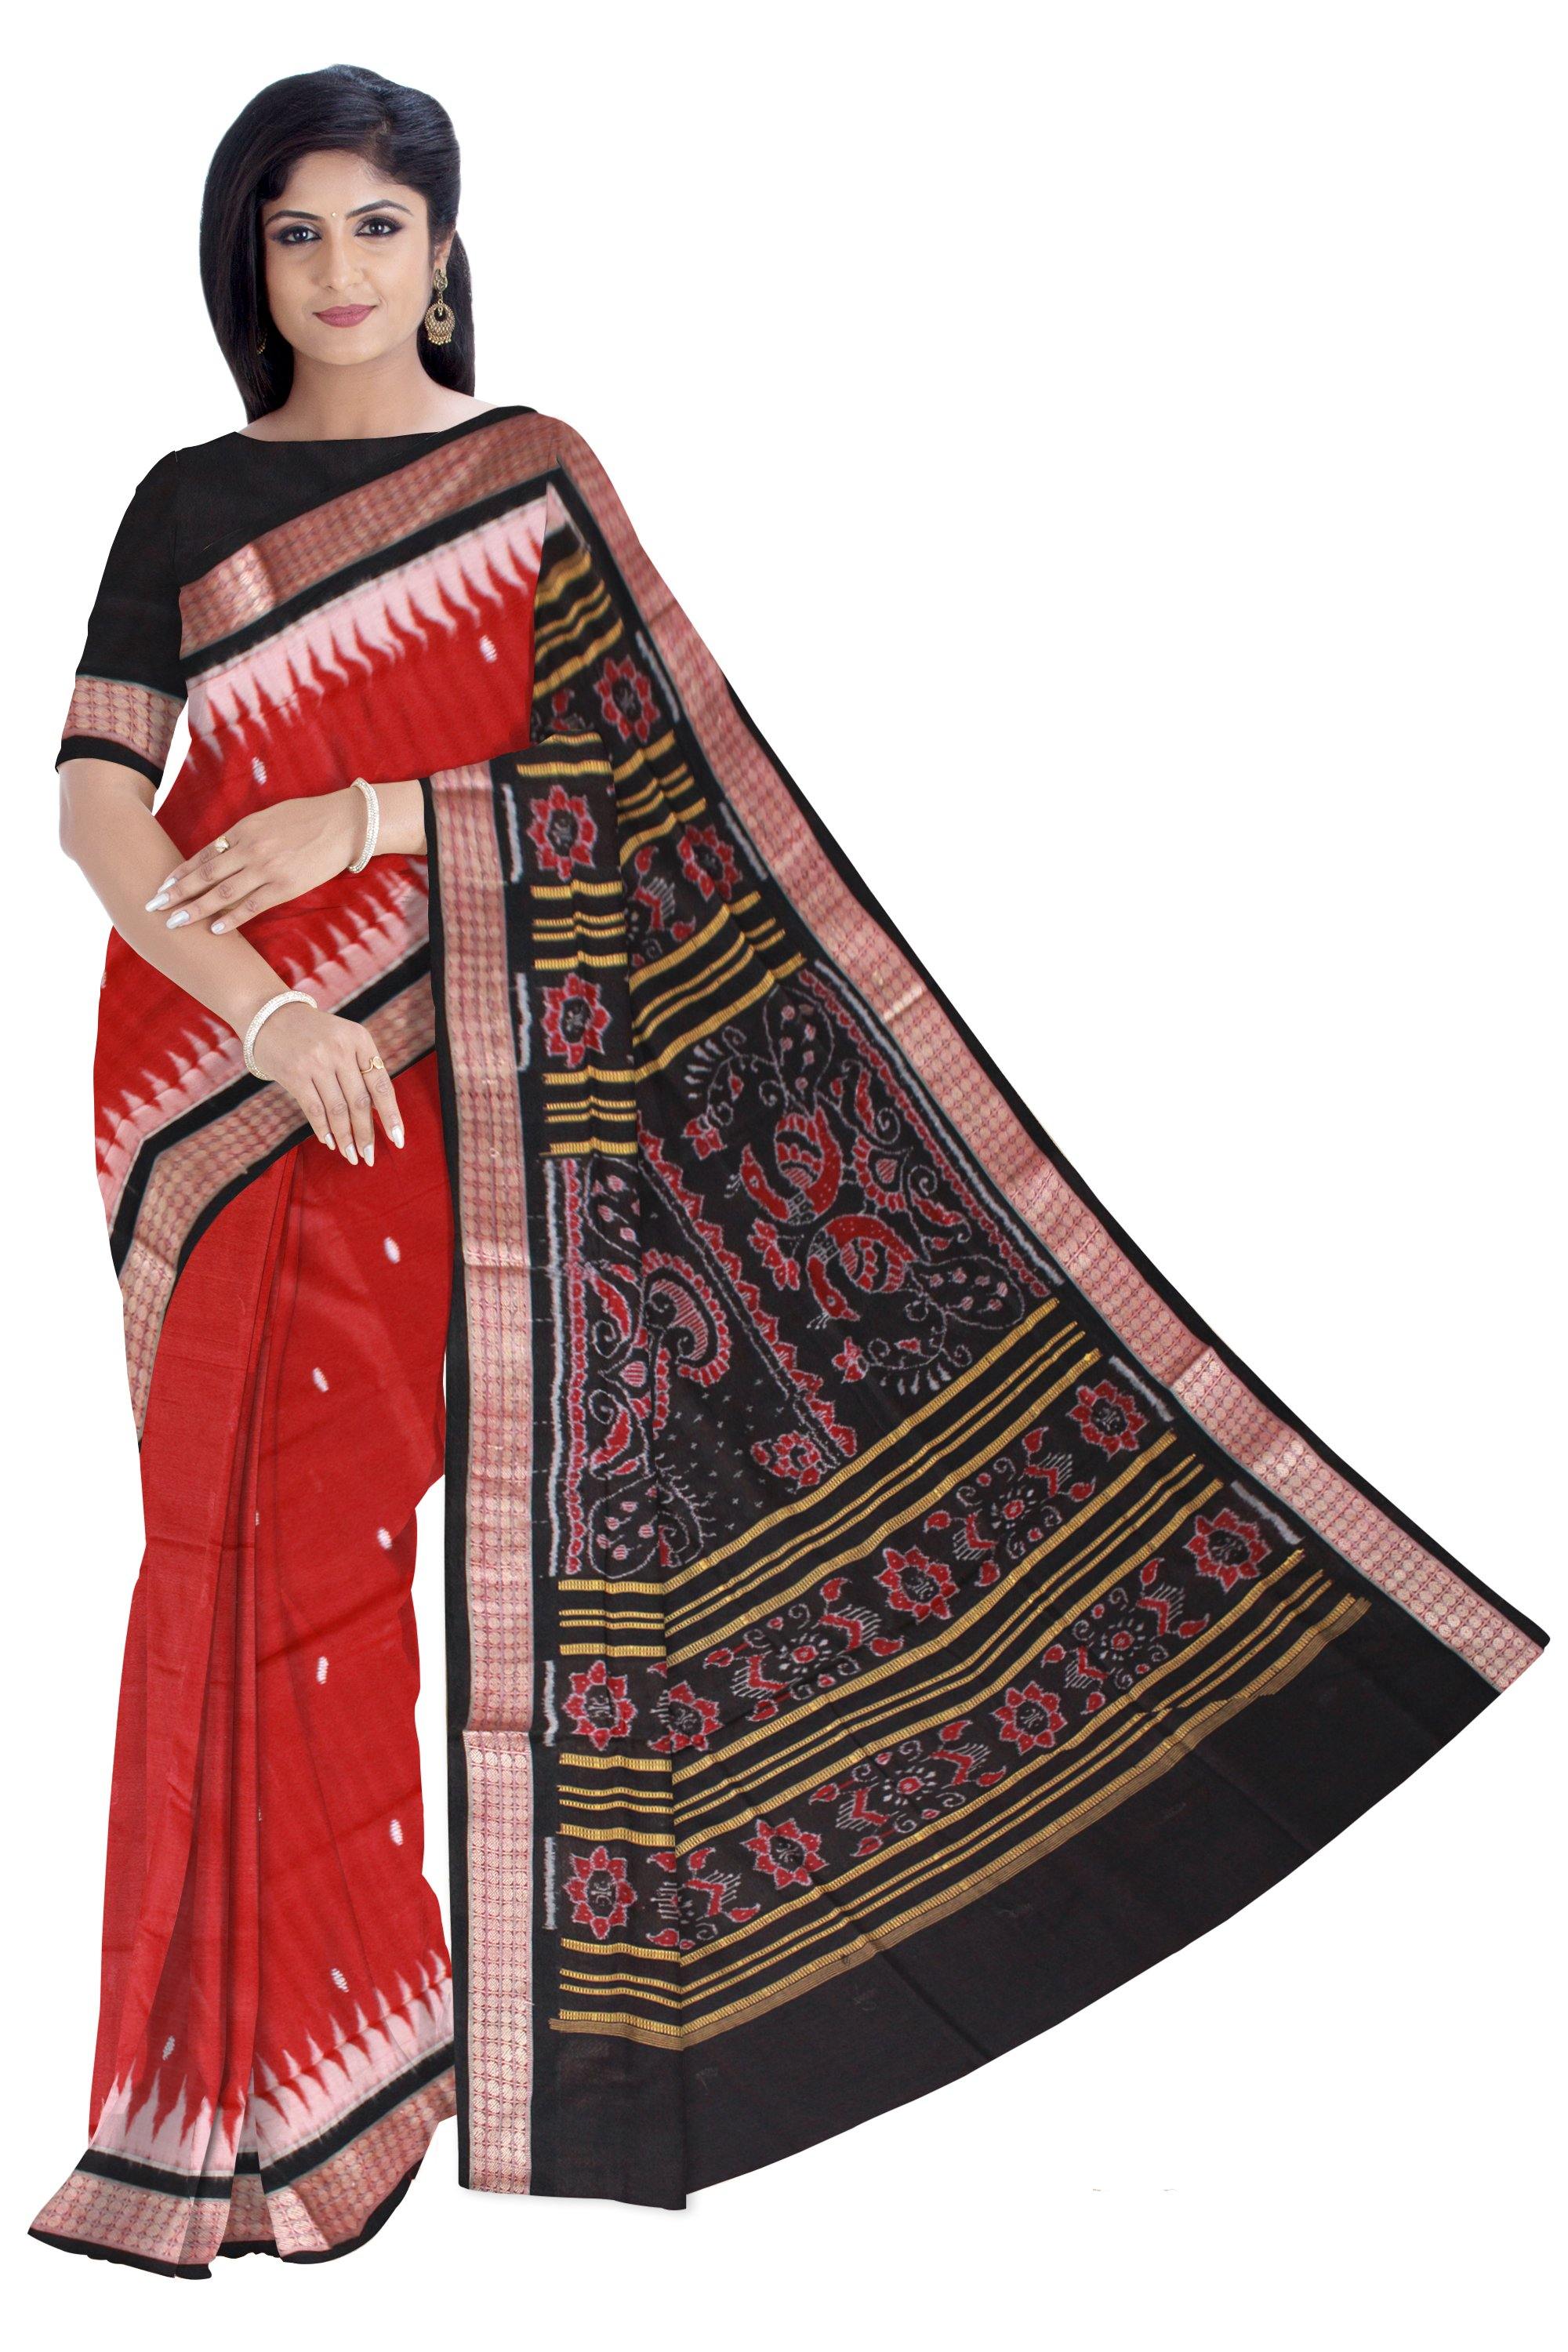 Pata Dhadi Plain Bomkai Cotton Saree in Dark Maroon - Koshali Arts & Crafts Enterprise